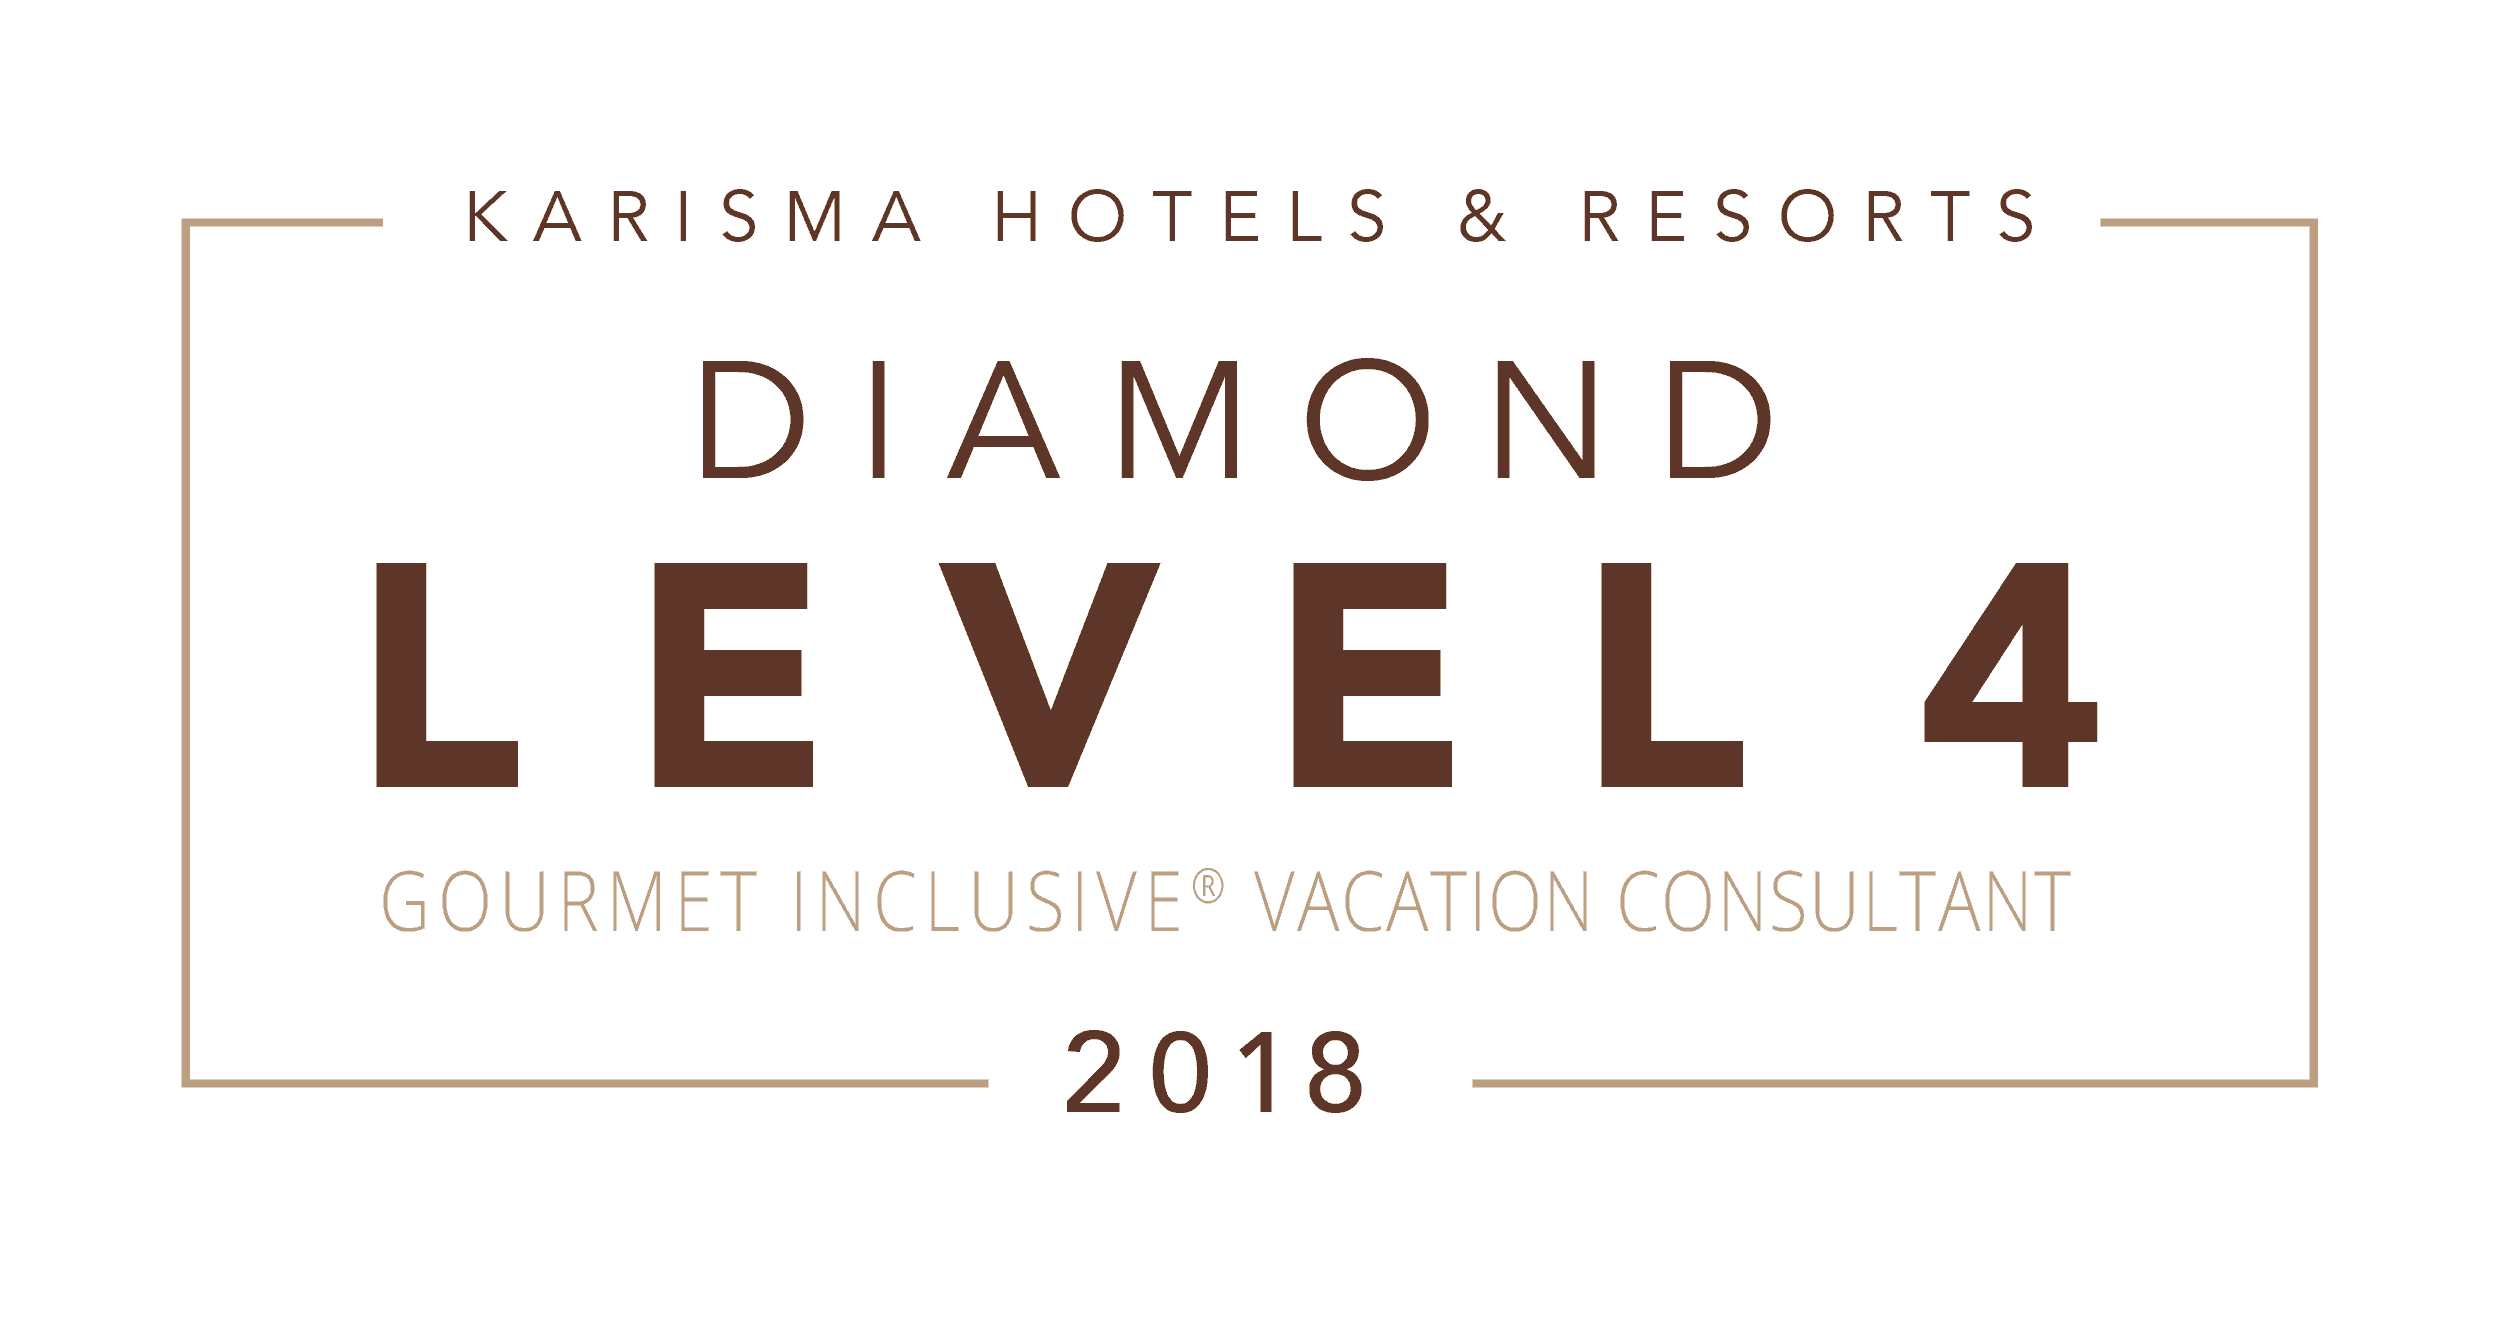 The diamond level 4 logo for Karisma Hotels & Resorts